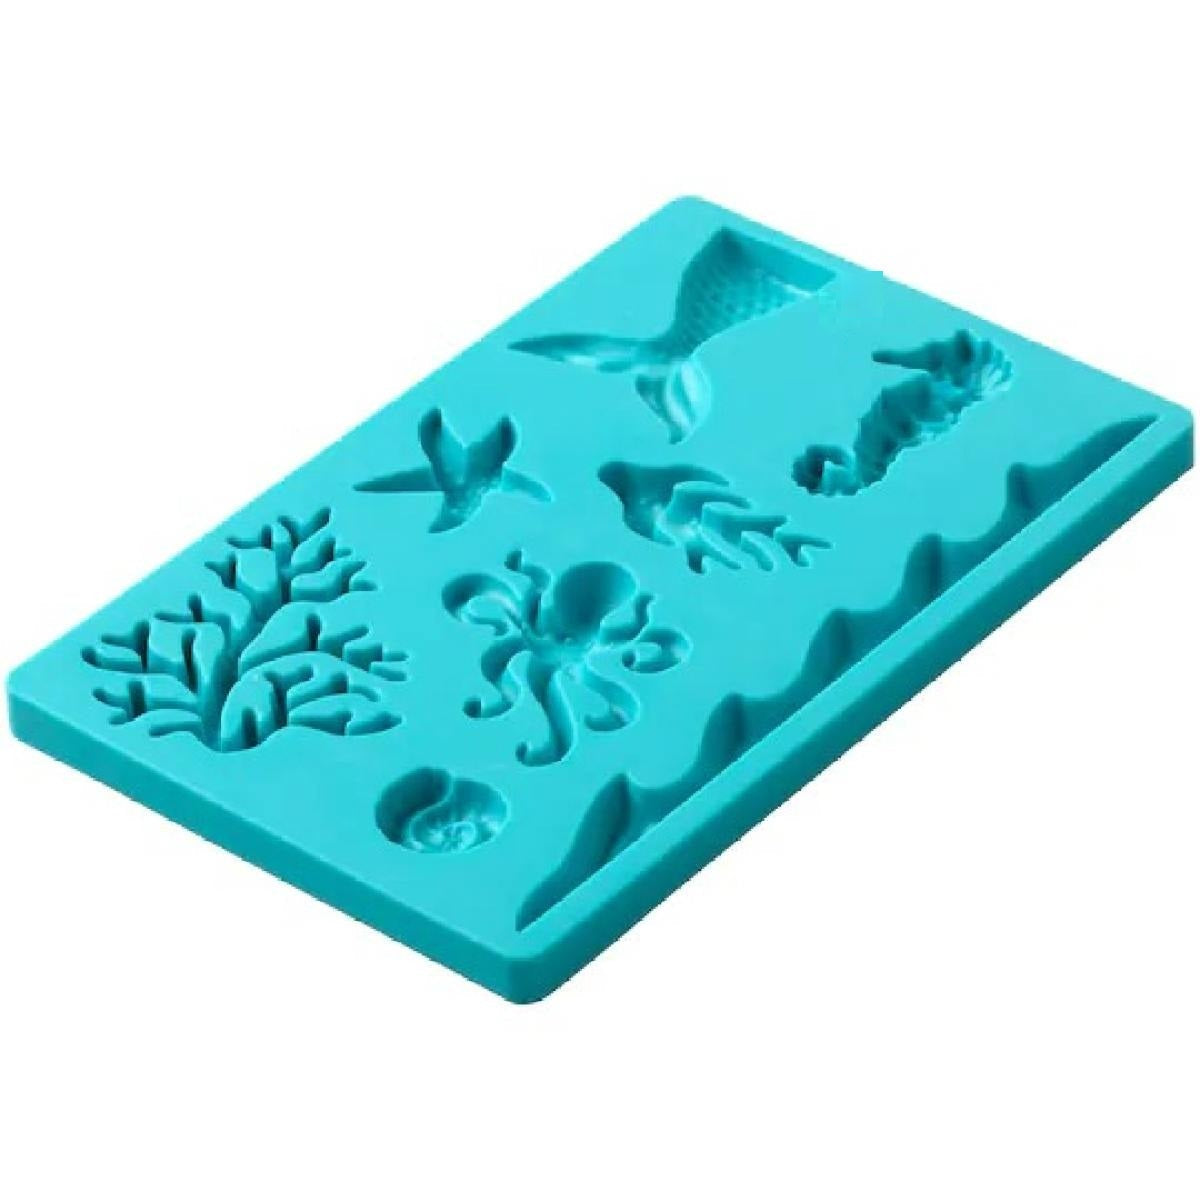 Sea Life Theme Silicone Fondant & Gum paste Mold